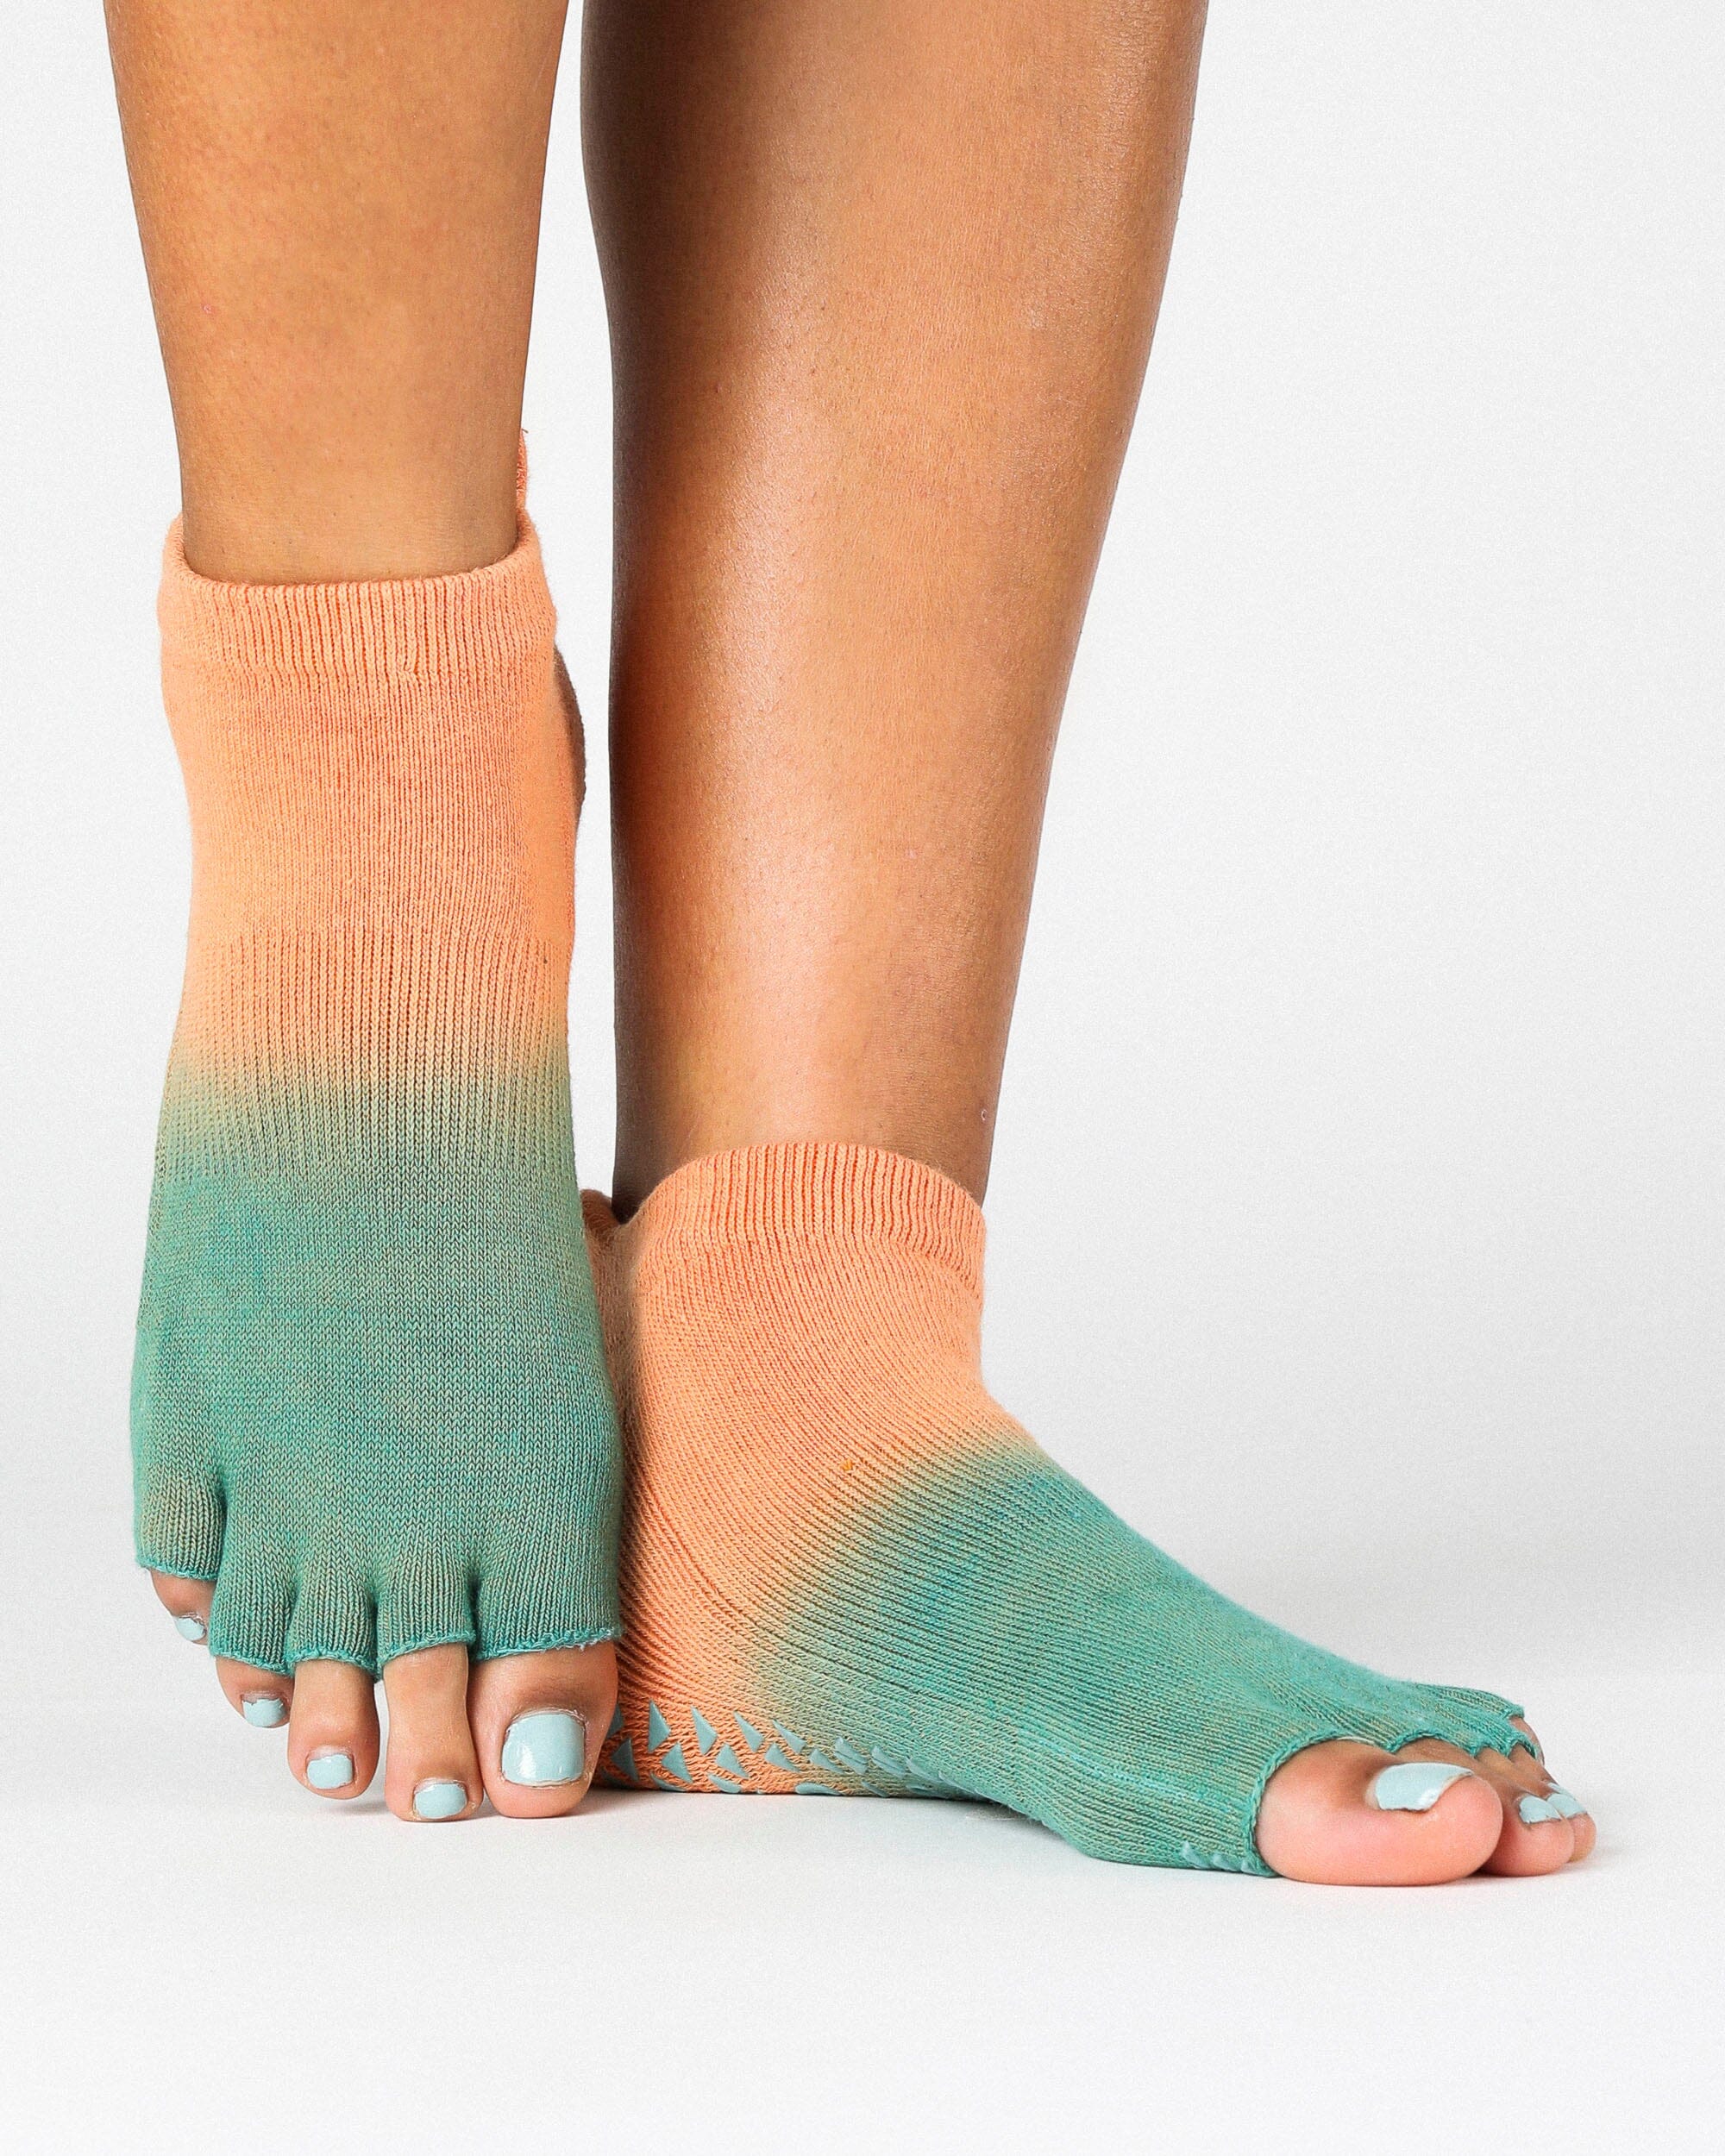 TOETOE® Socks - Mid-Calf Toe Socks Deep Green Unisize